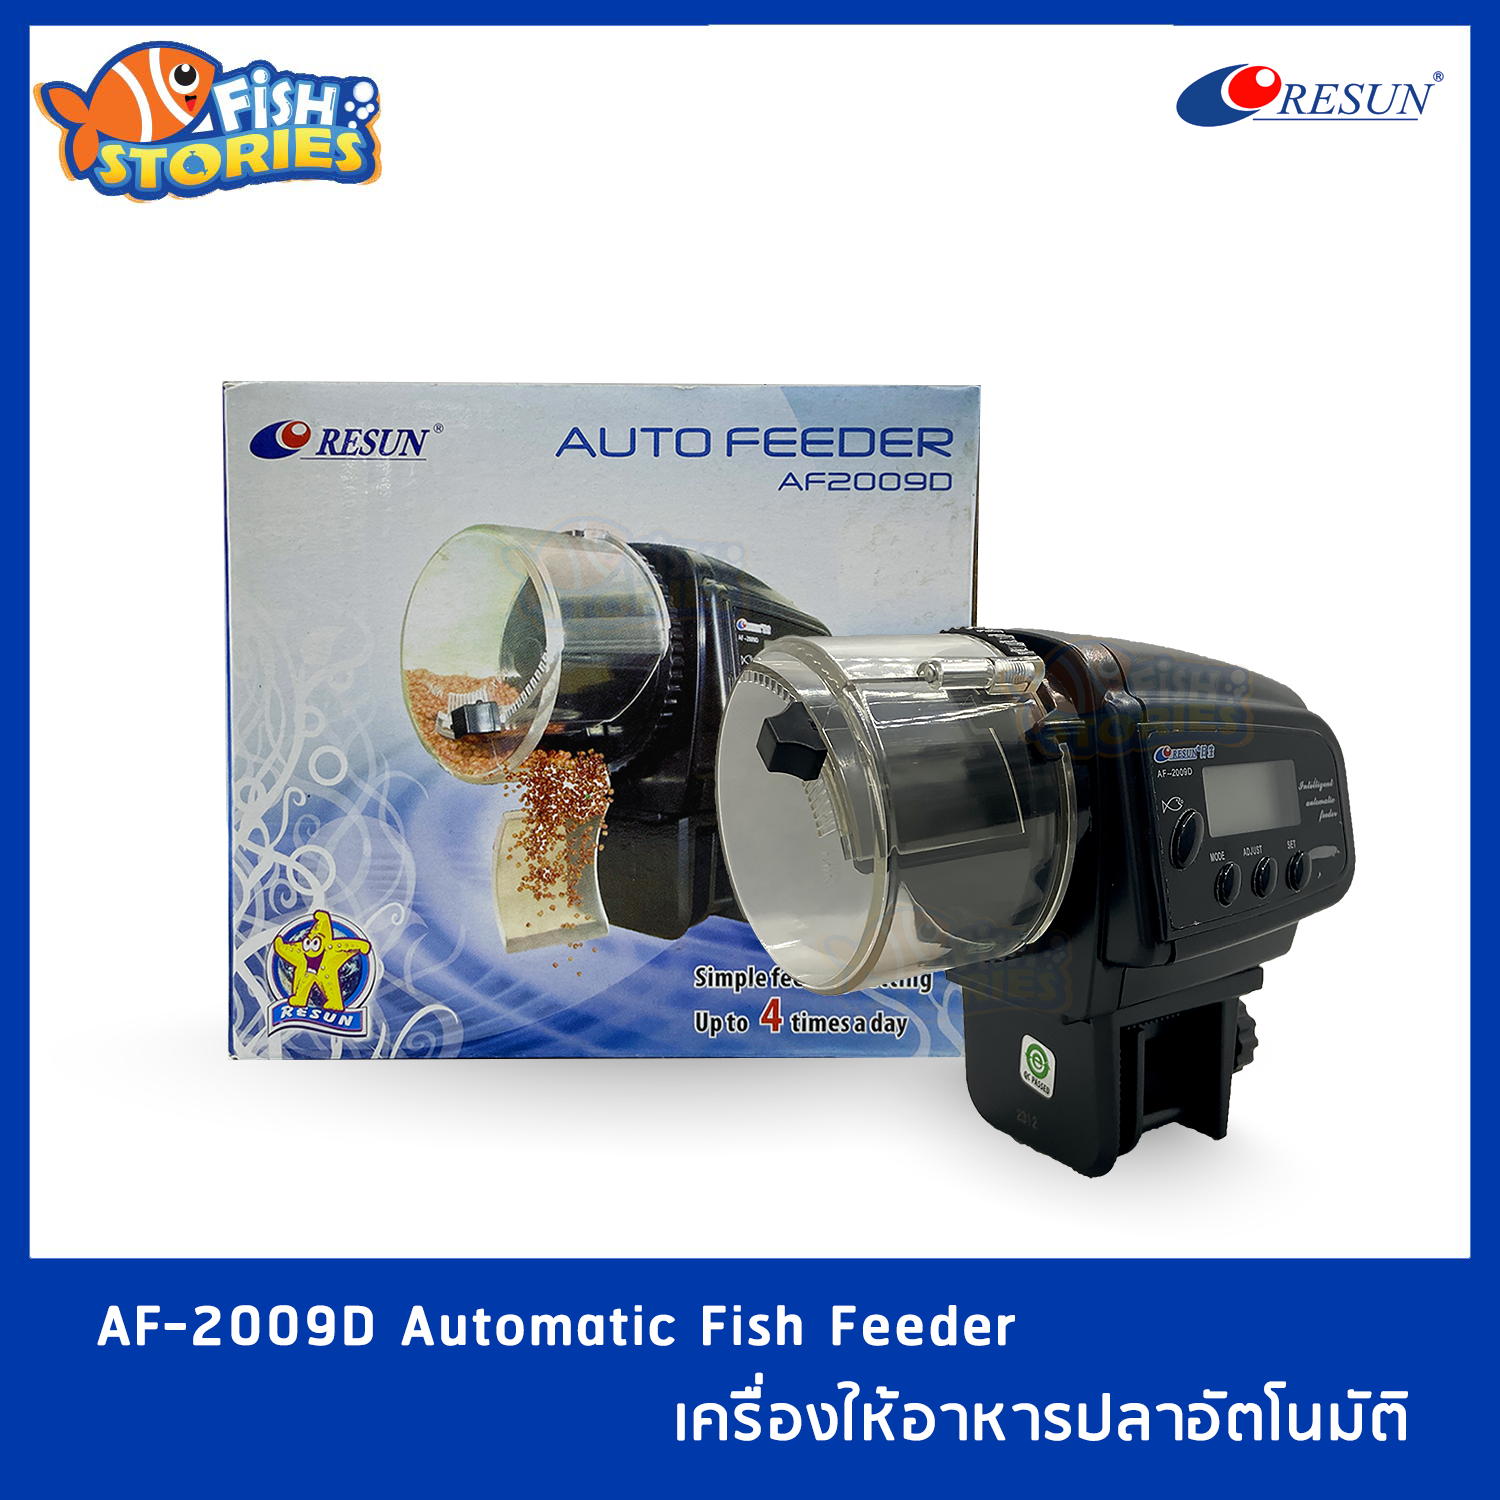 Resun AF-2009D Digital Automatic Fish Feeder เครื่องให้อาหารปลาอัตโนมัติ ตั้งเวลาให้อาหารปลา